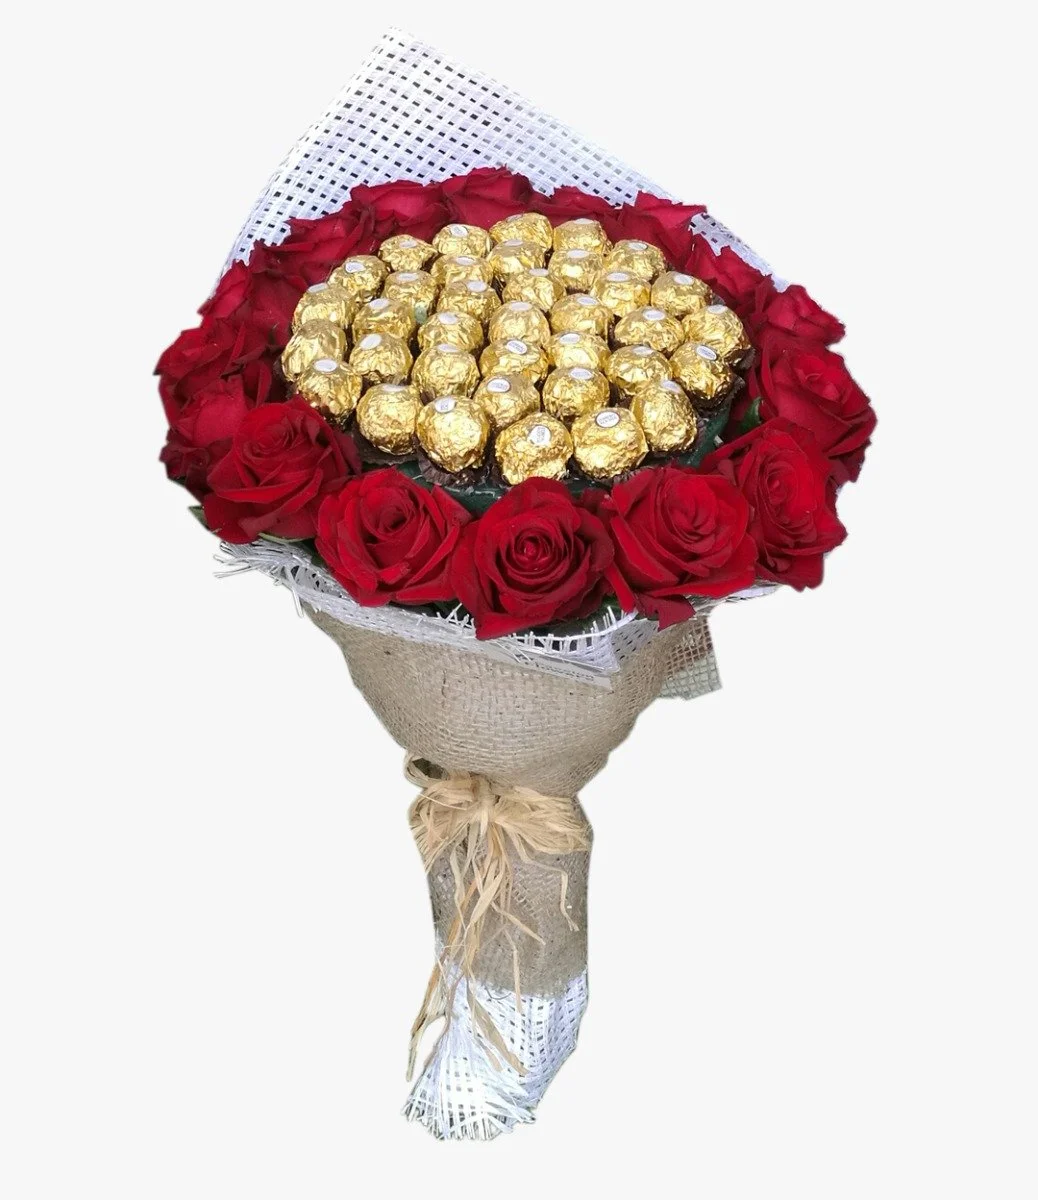 The Splendid Flower & Chocolate Bouquet